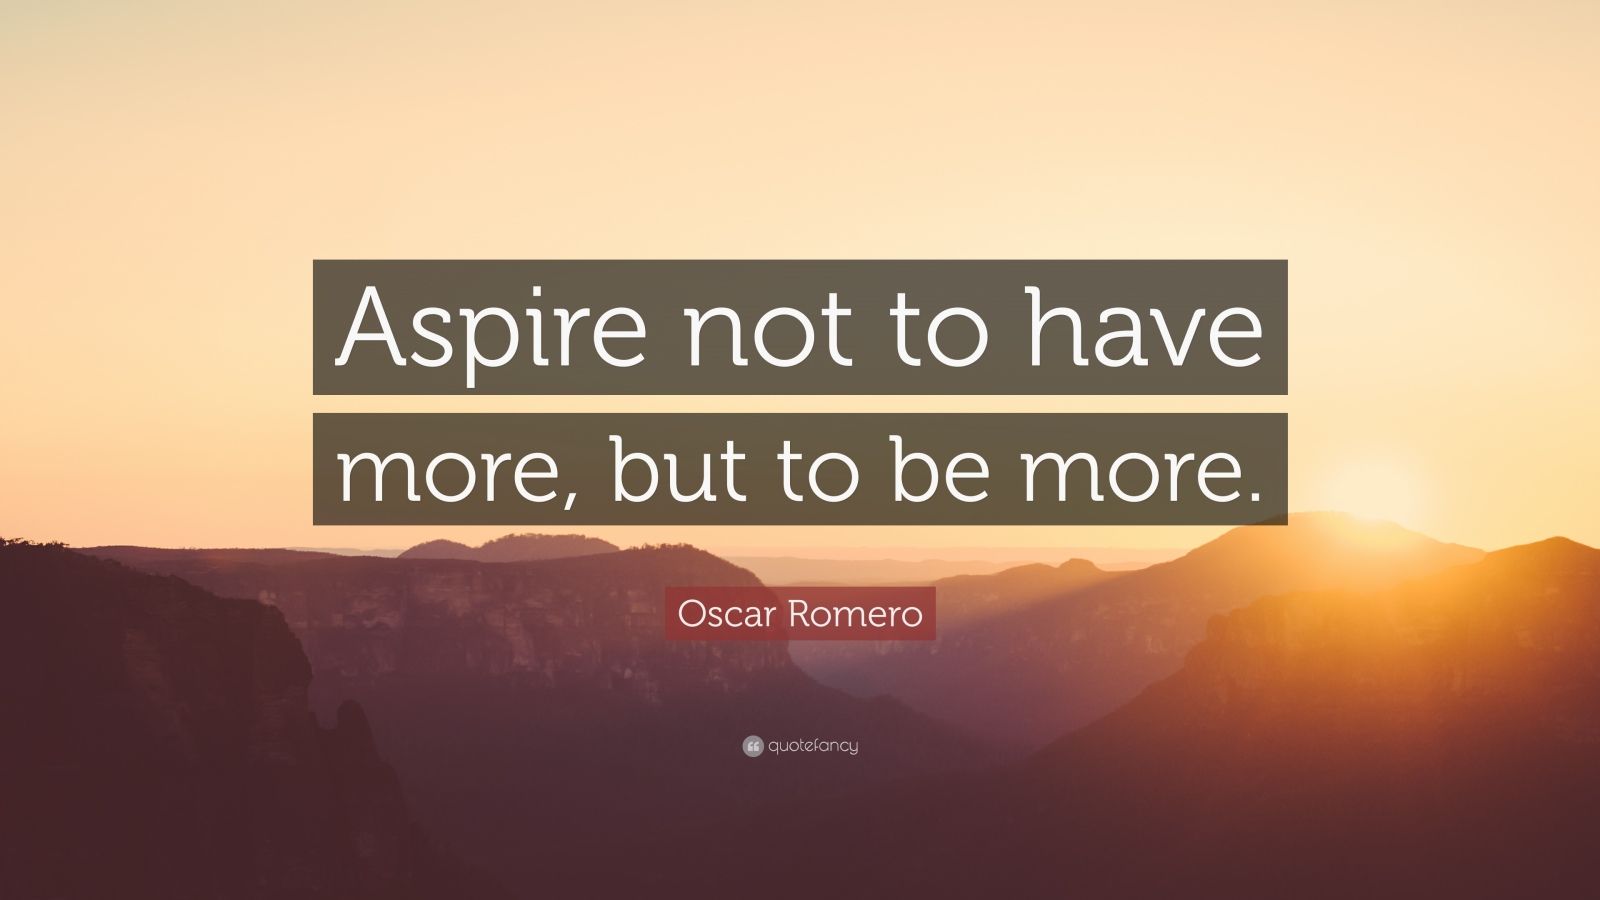 Oscar Romero Quotes (37 wallpapers) - Quotefancy